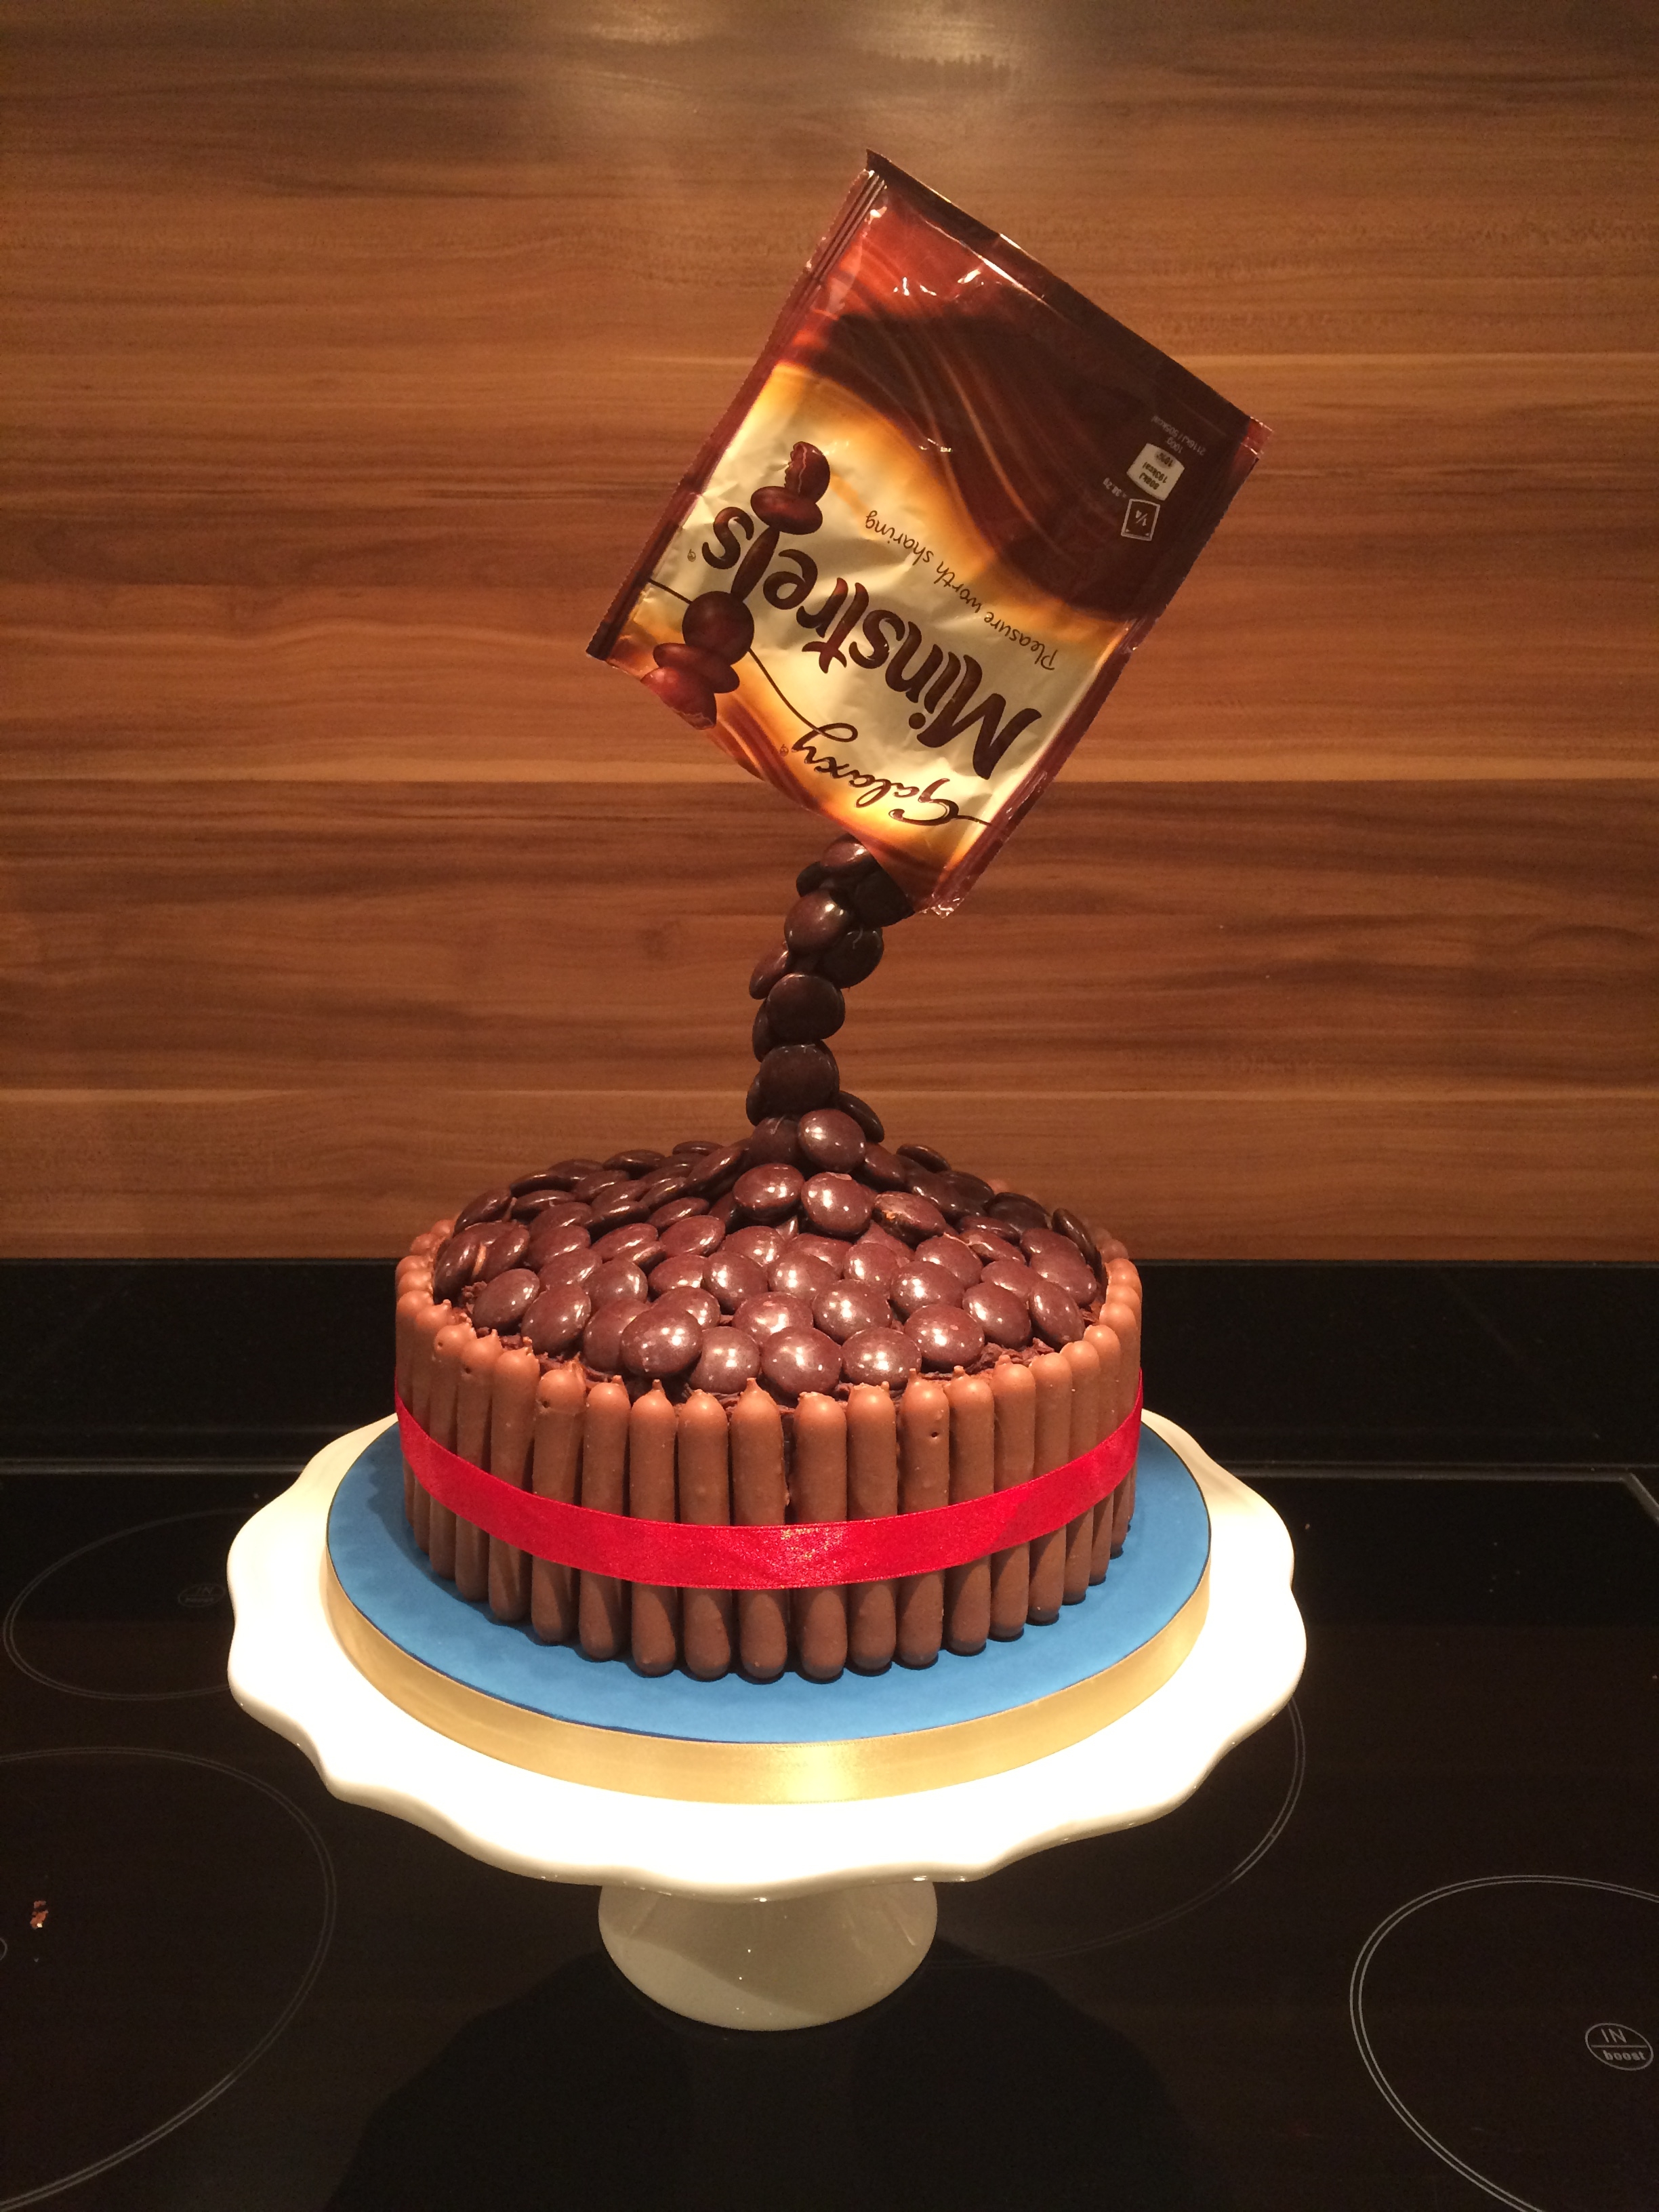 Chocolate pouring cake